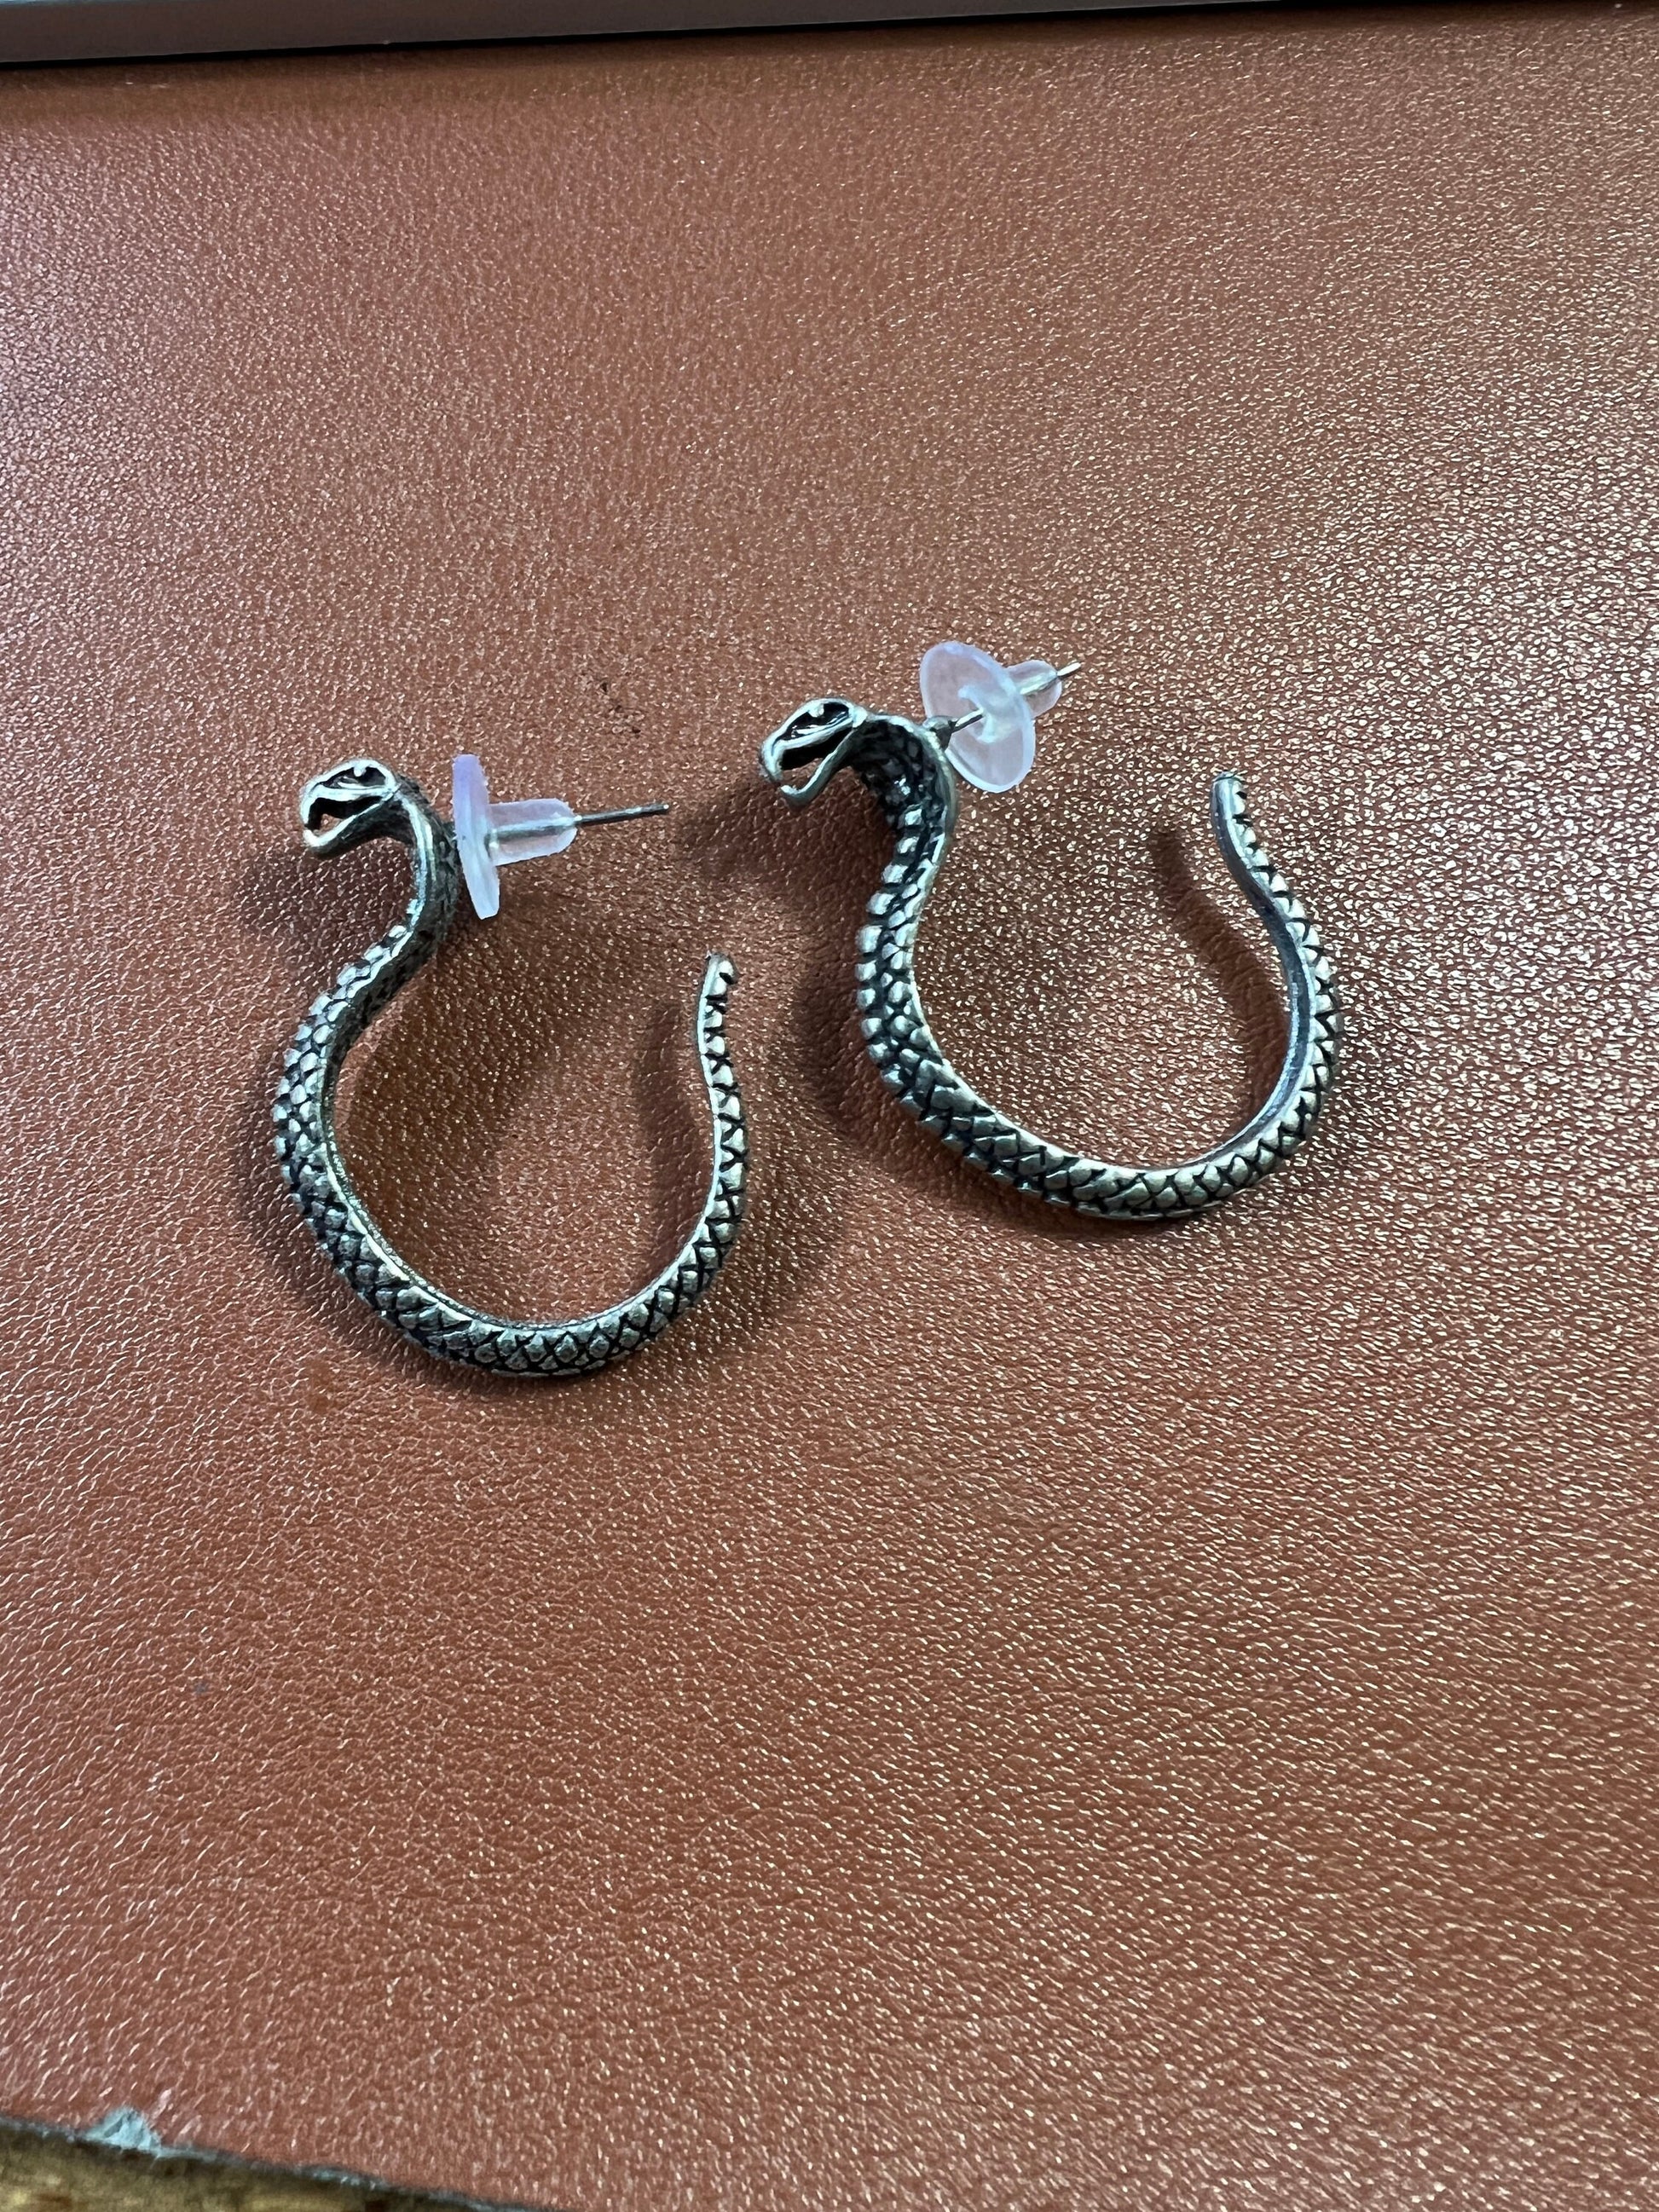 Pair of King Cobra Snake Stud Post Earrings (#6)